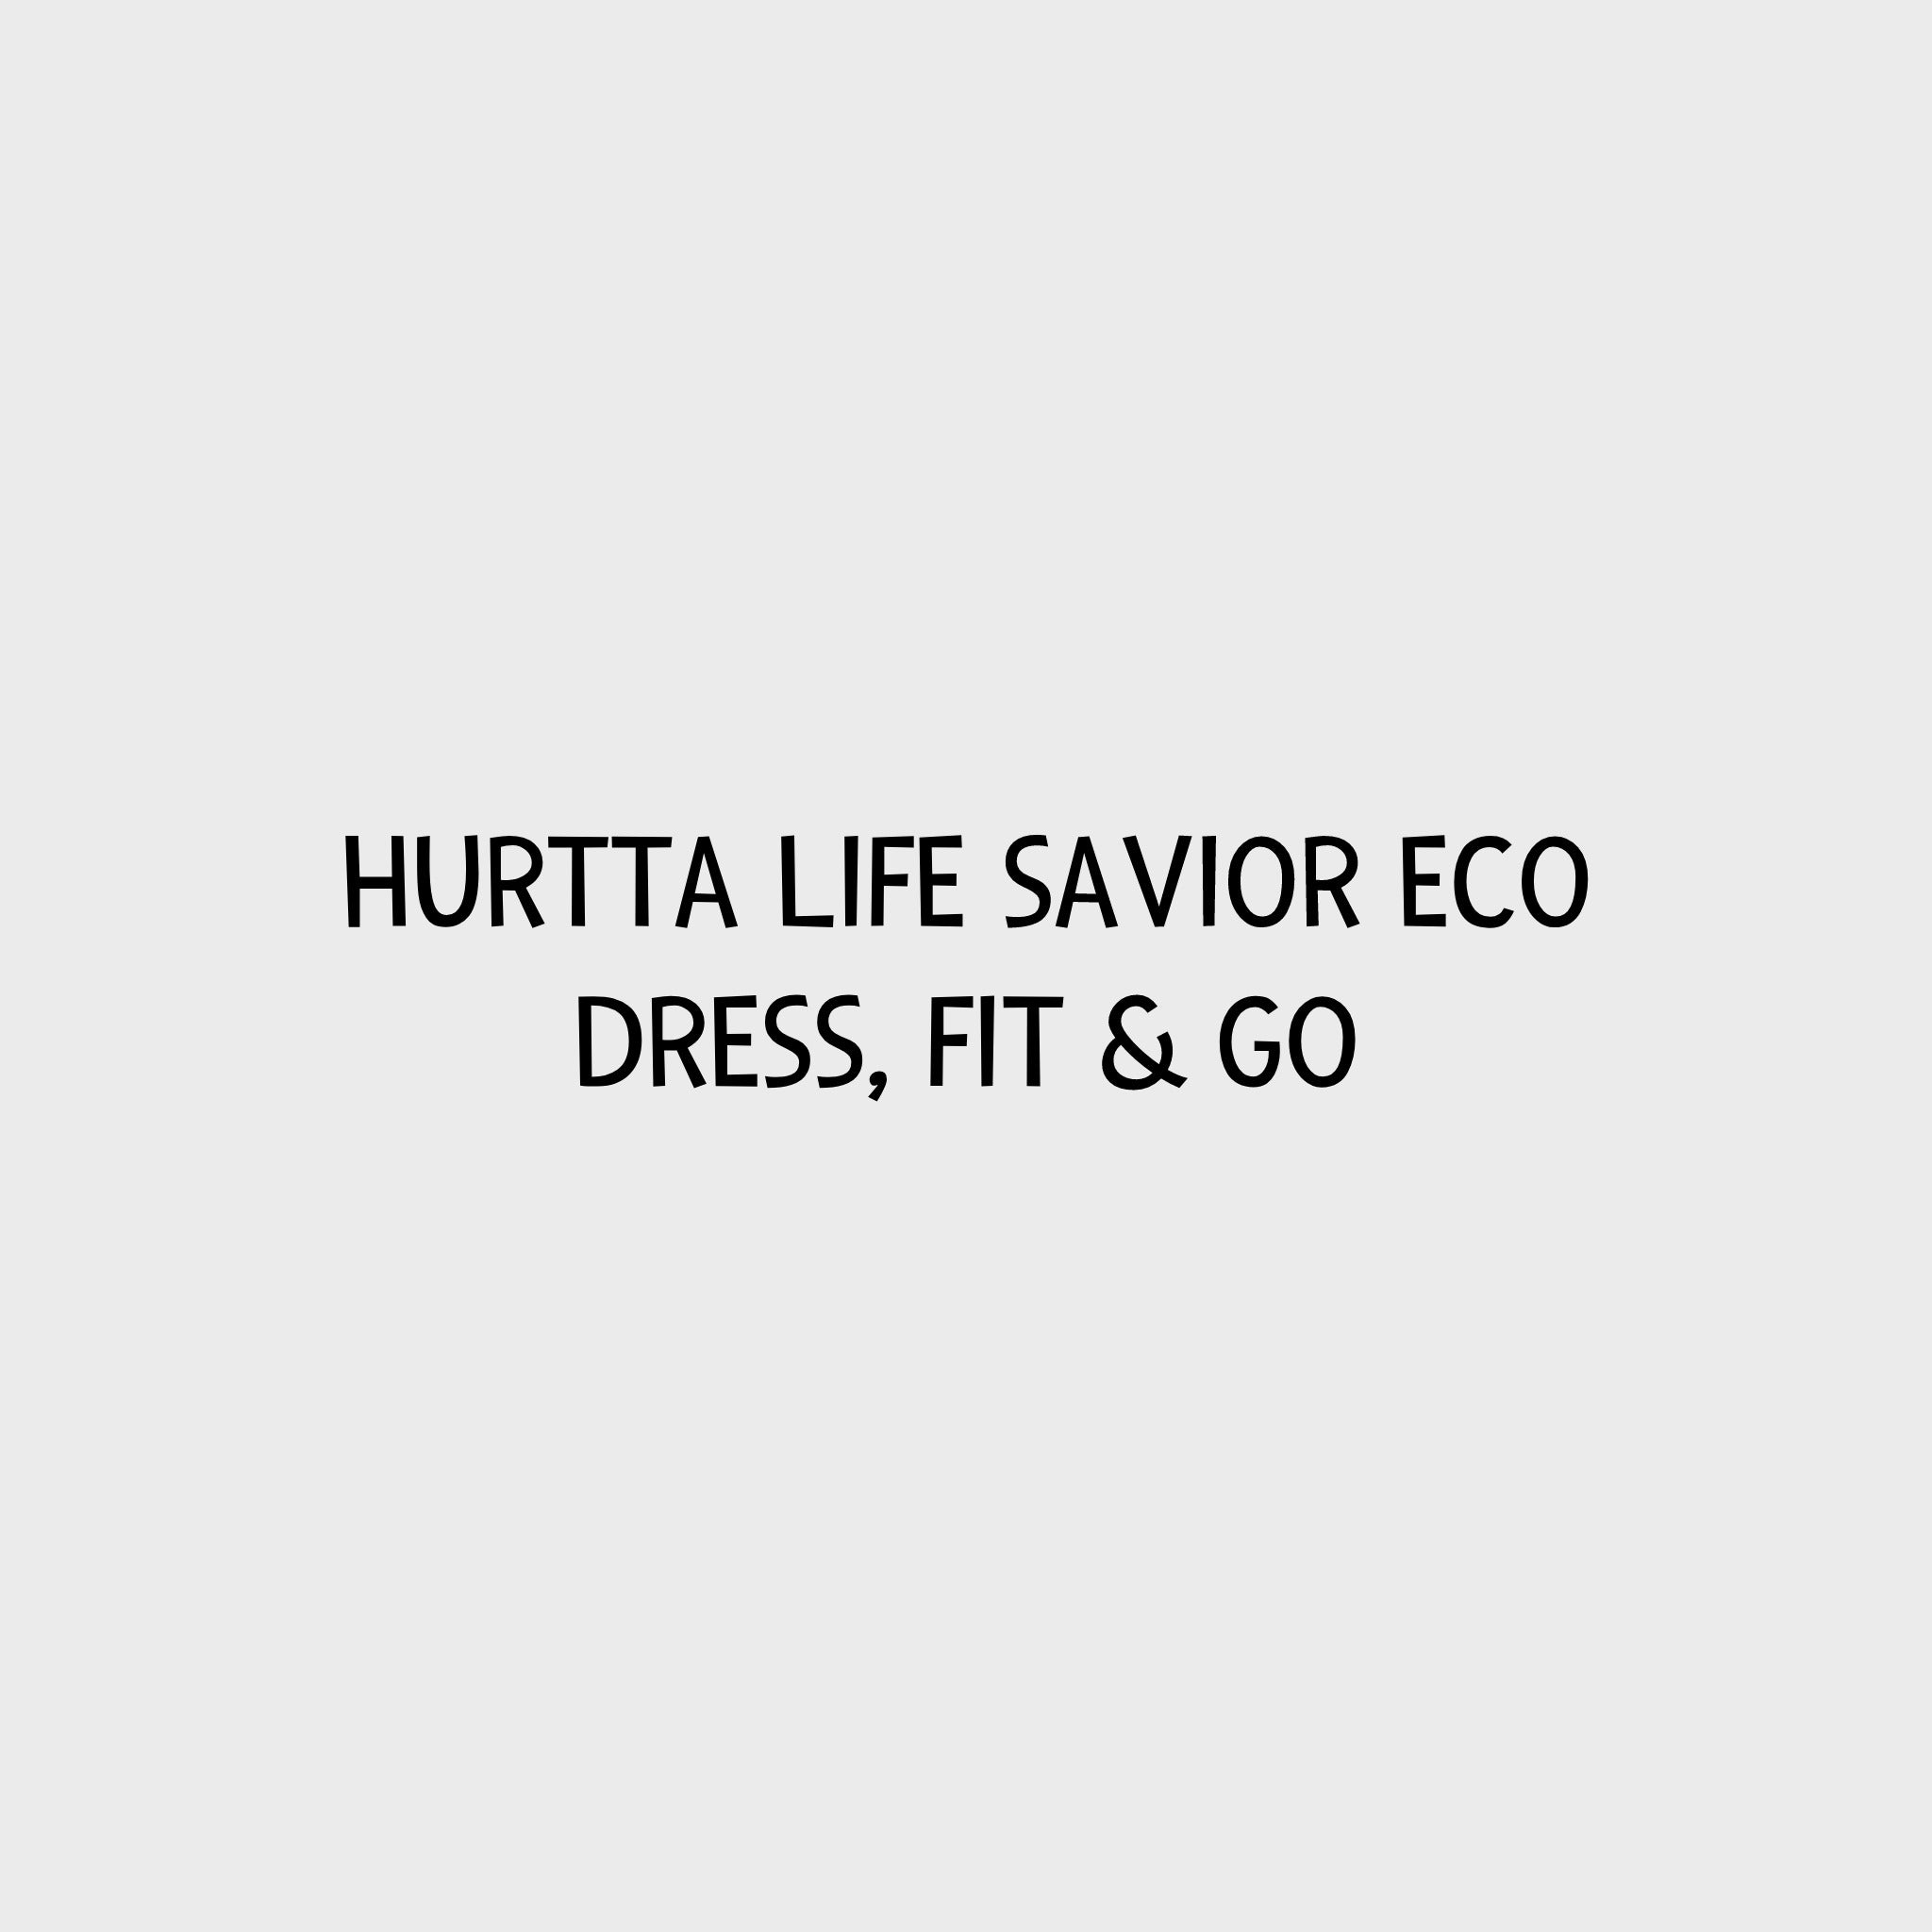 Video - Hurtta Life Savior ECO Dress, Fit & Go